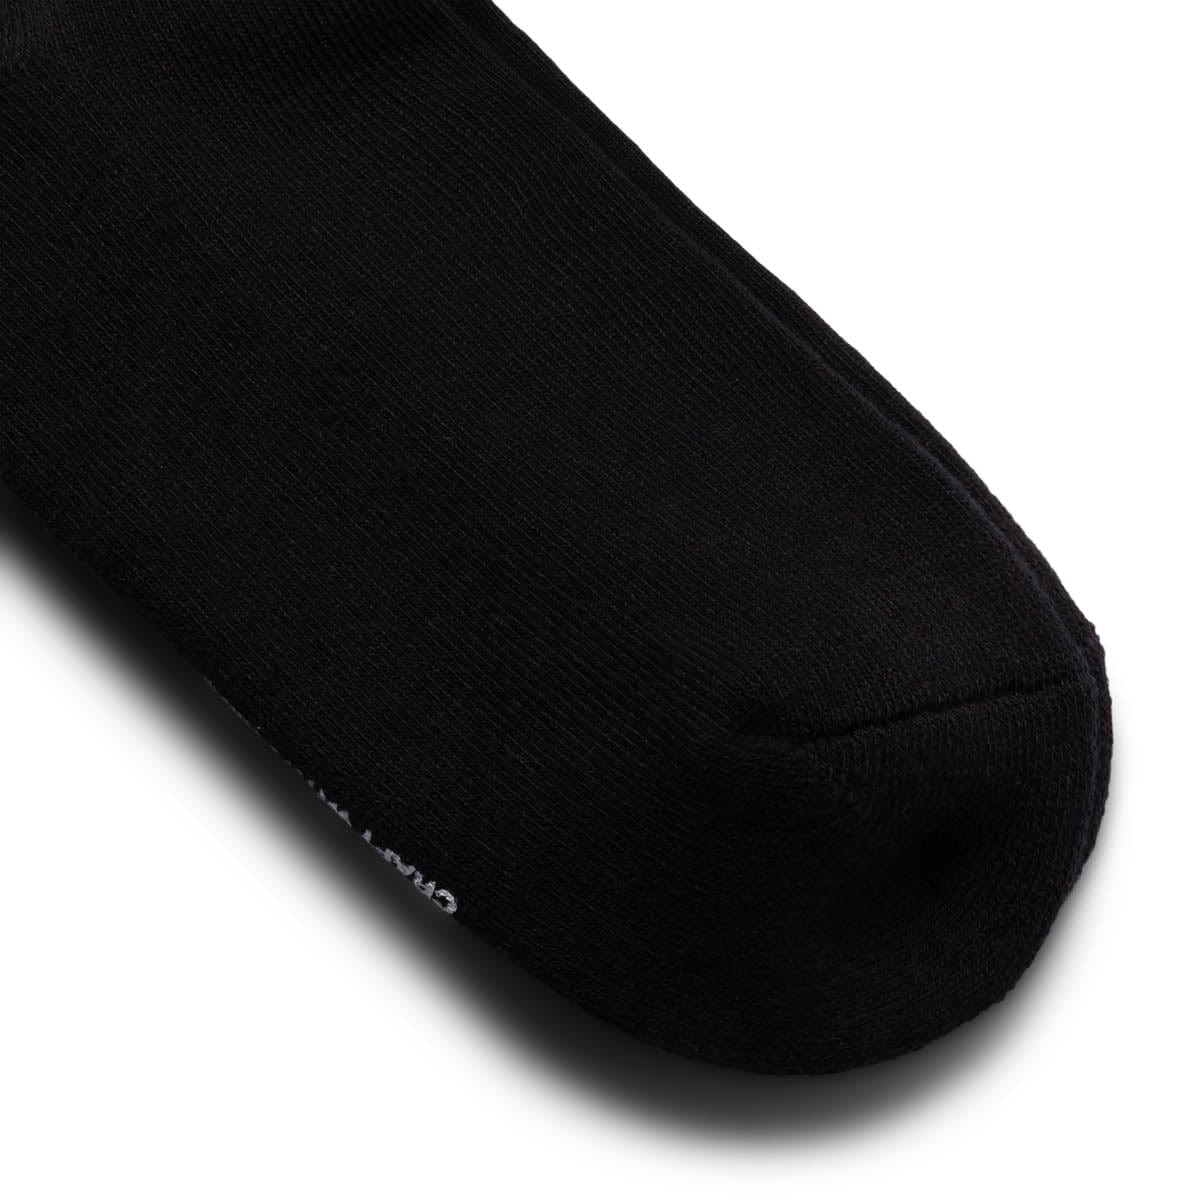 Neighborhood Socks BLACK / O/S NH LOGO SOCKS